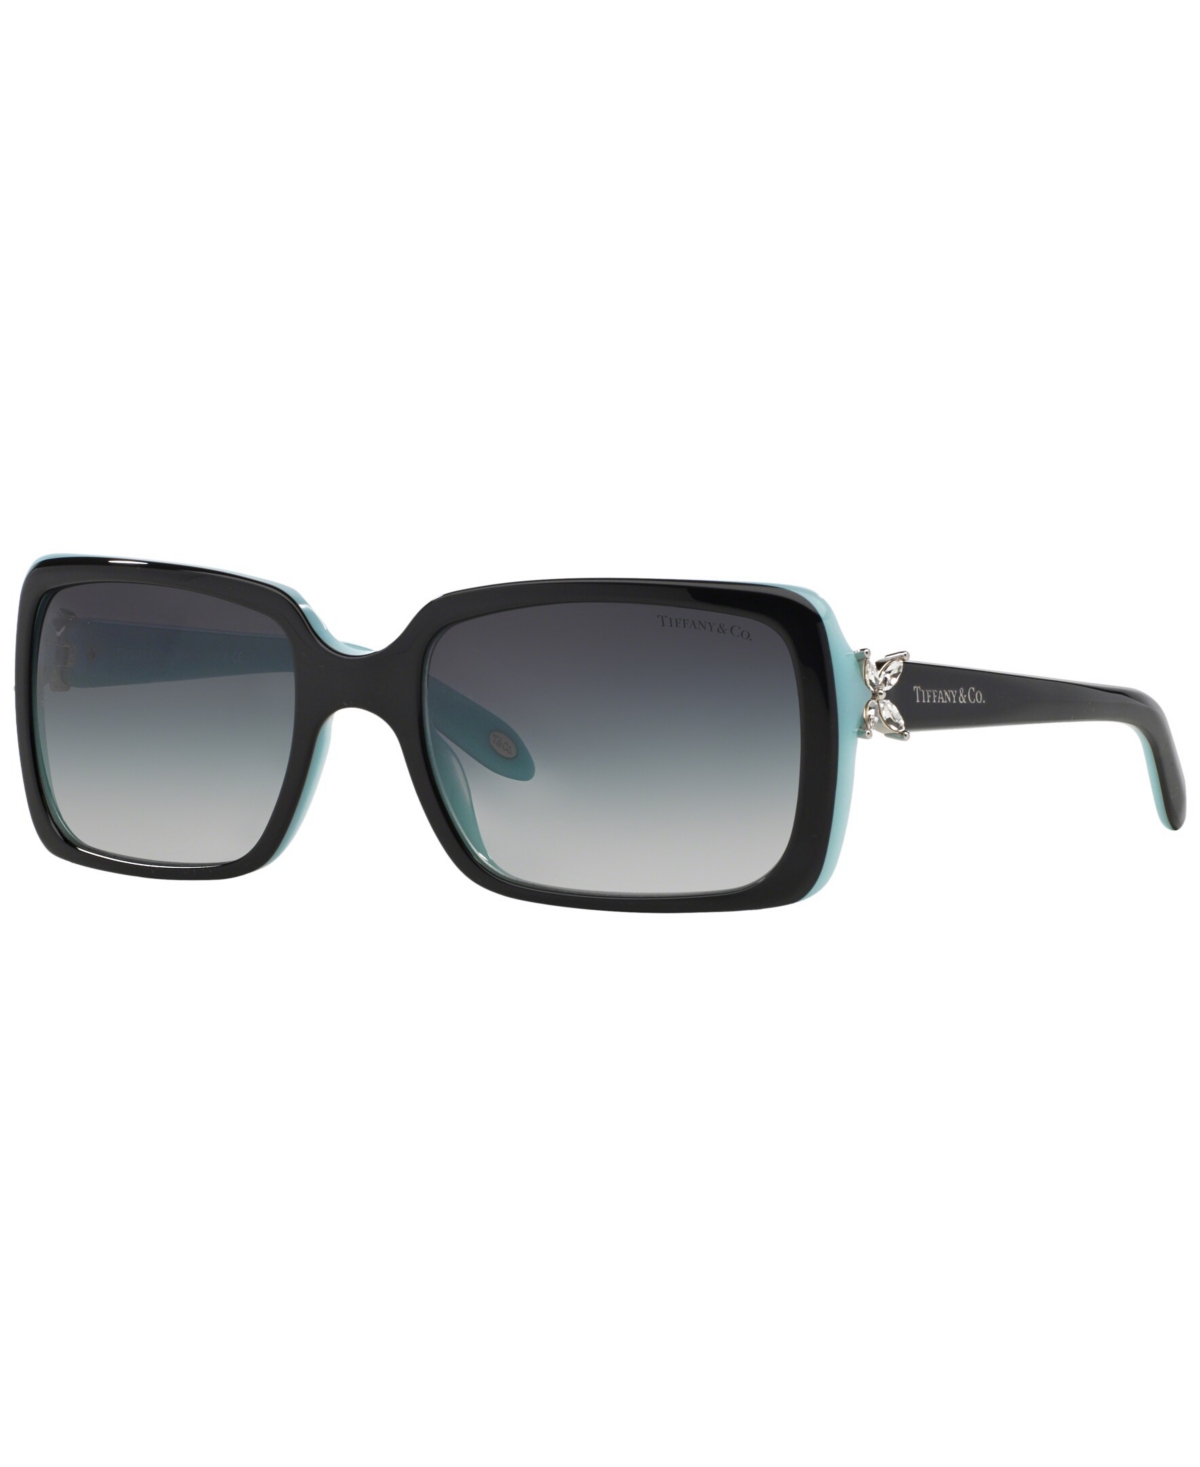 Tiffany & Co Women's Sunglasses, 55 In Black On Tiffany Blue